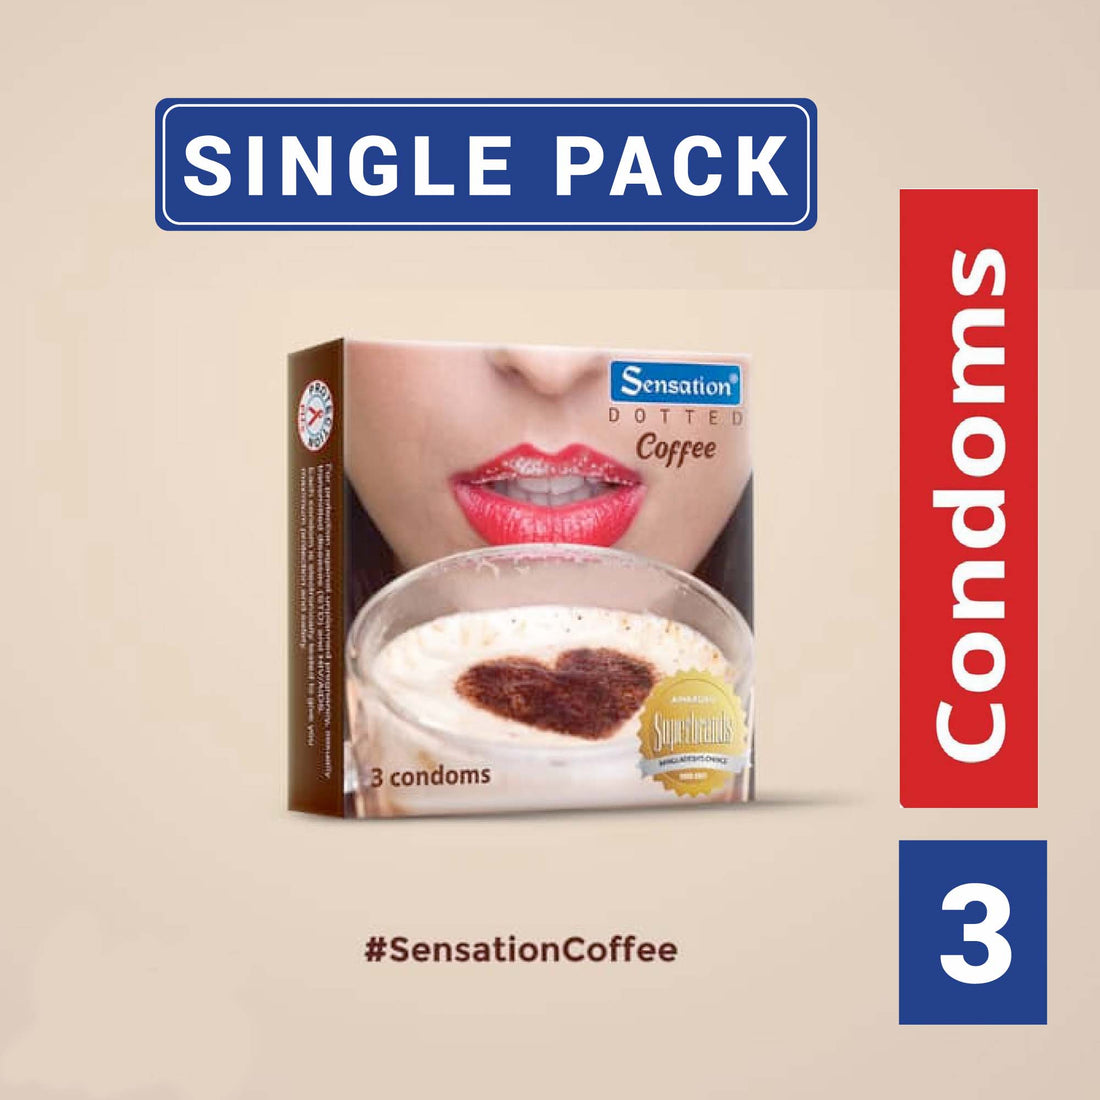 Sensation Dotted Coffee Flavored Condom 3 Piece